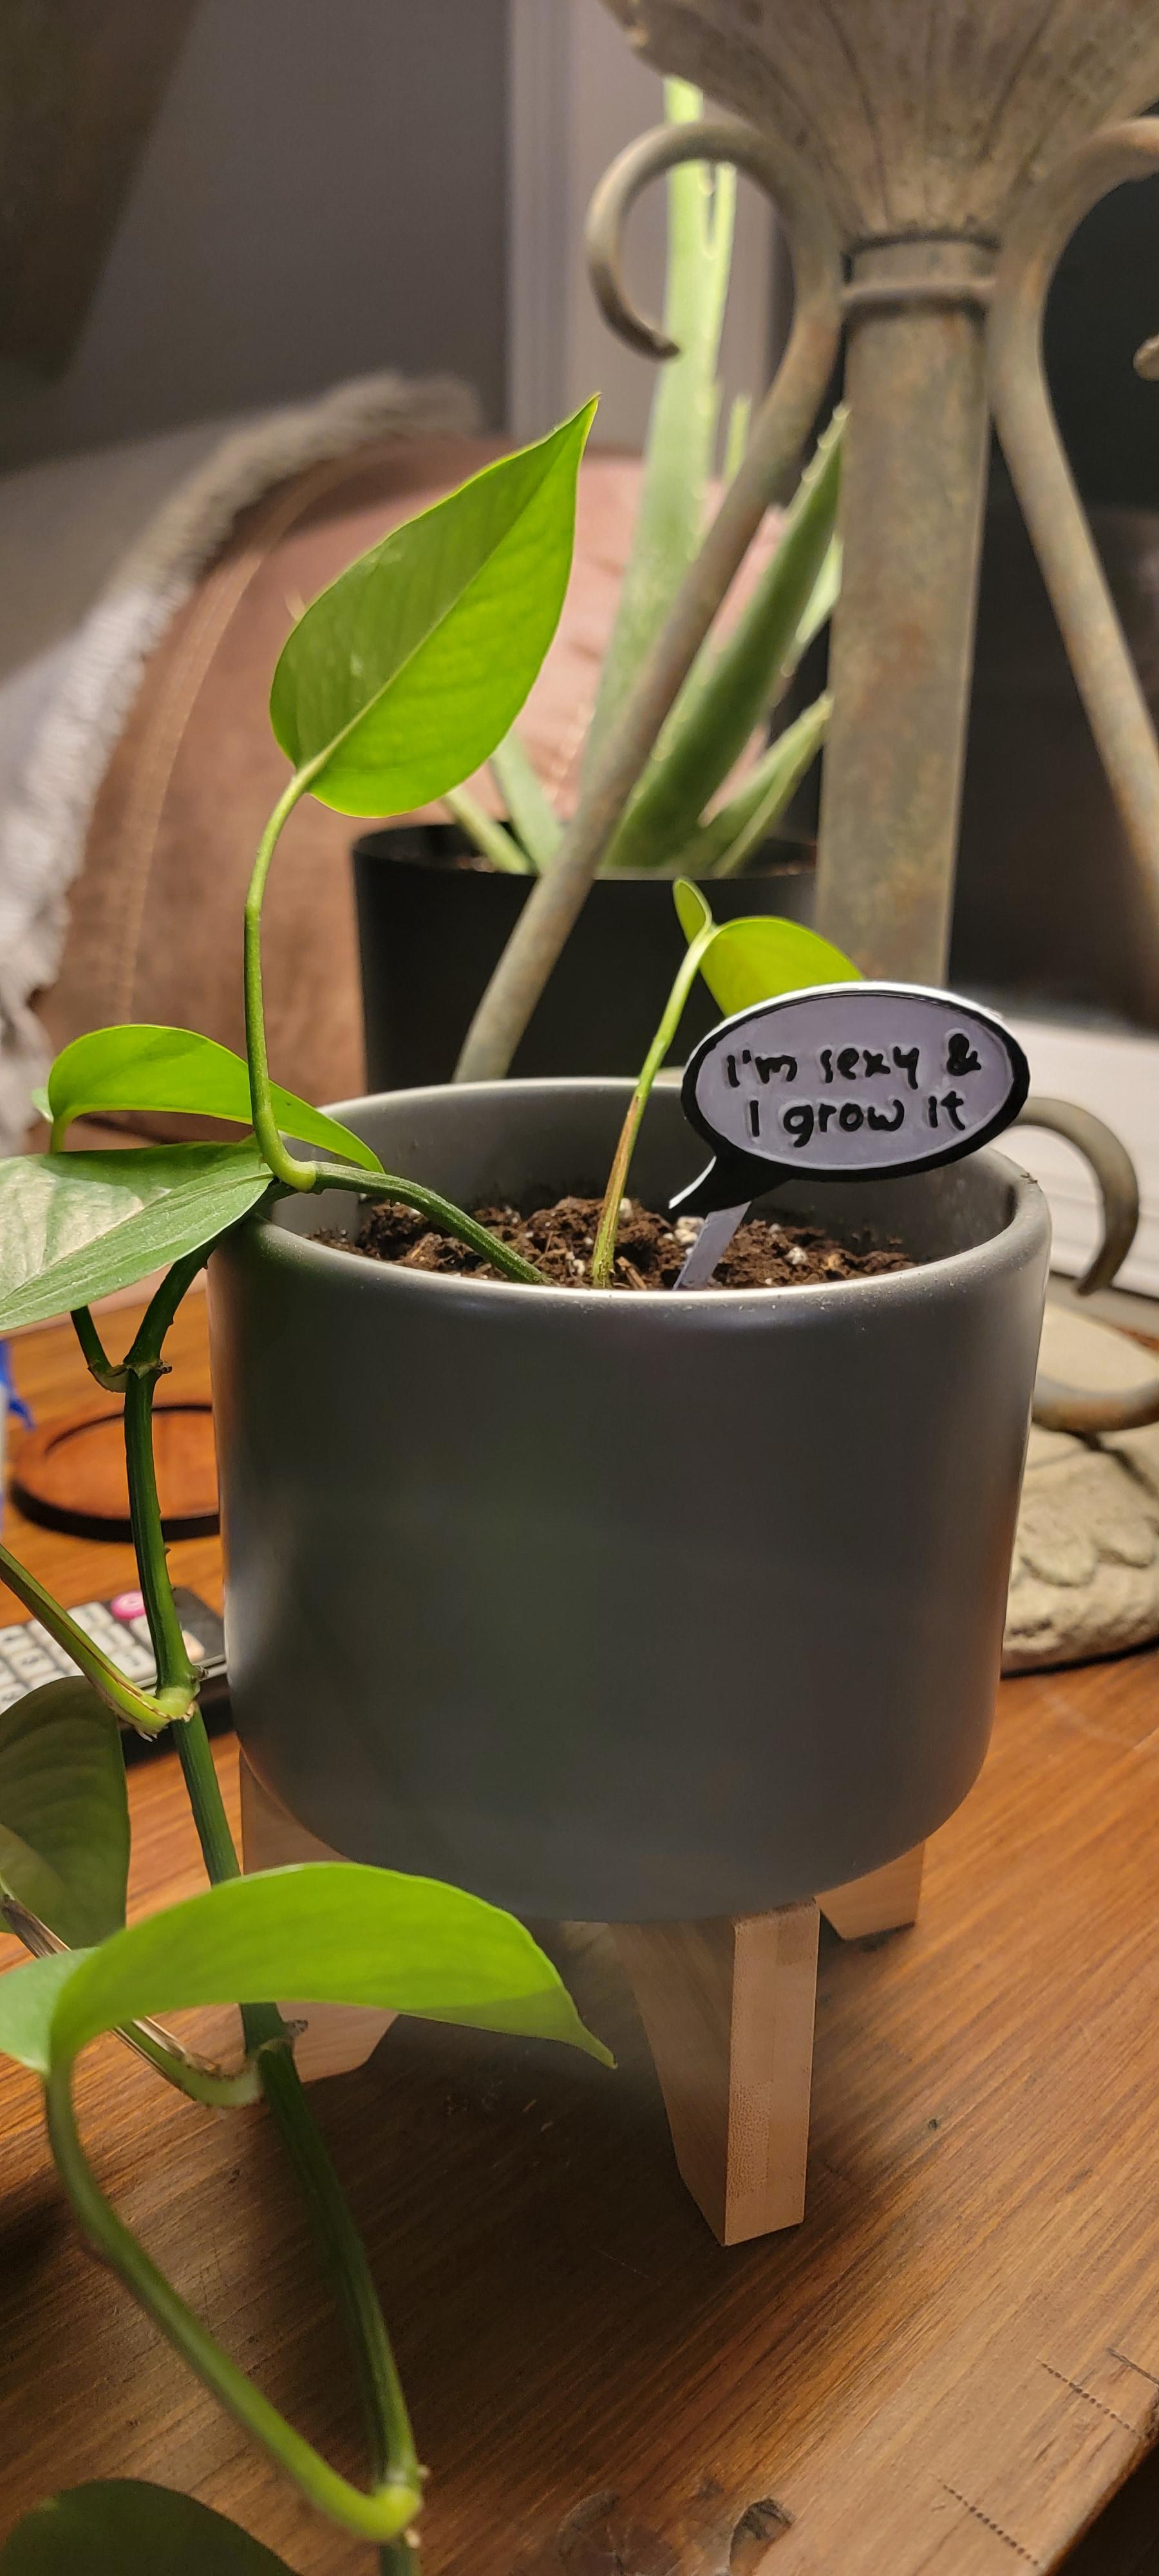 Plant Speech Balloon - I'm sexy and I grow it 3d model